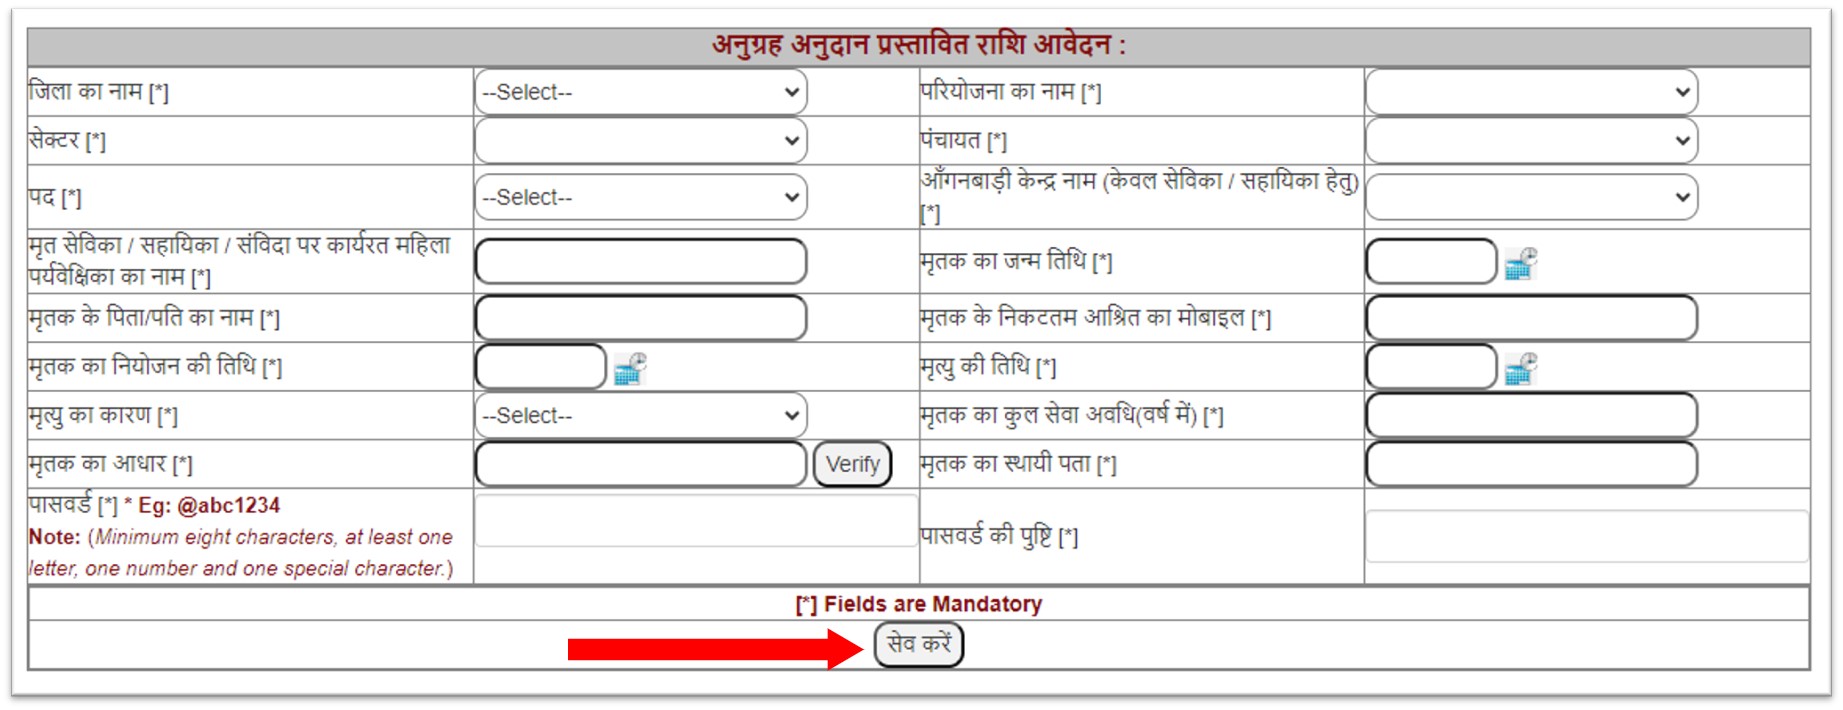 Bihar Anugraha webiste form fill